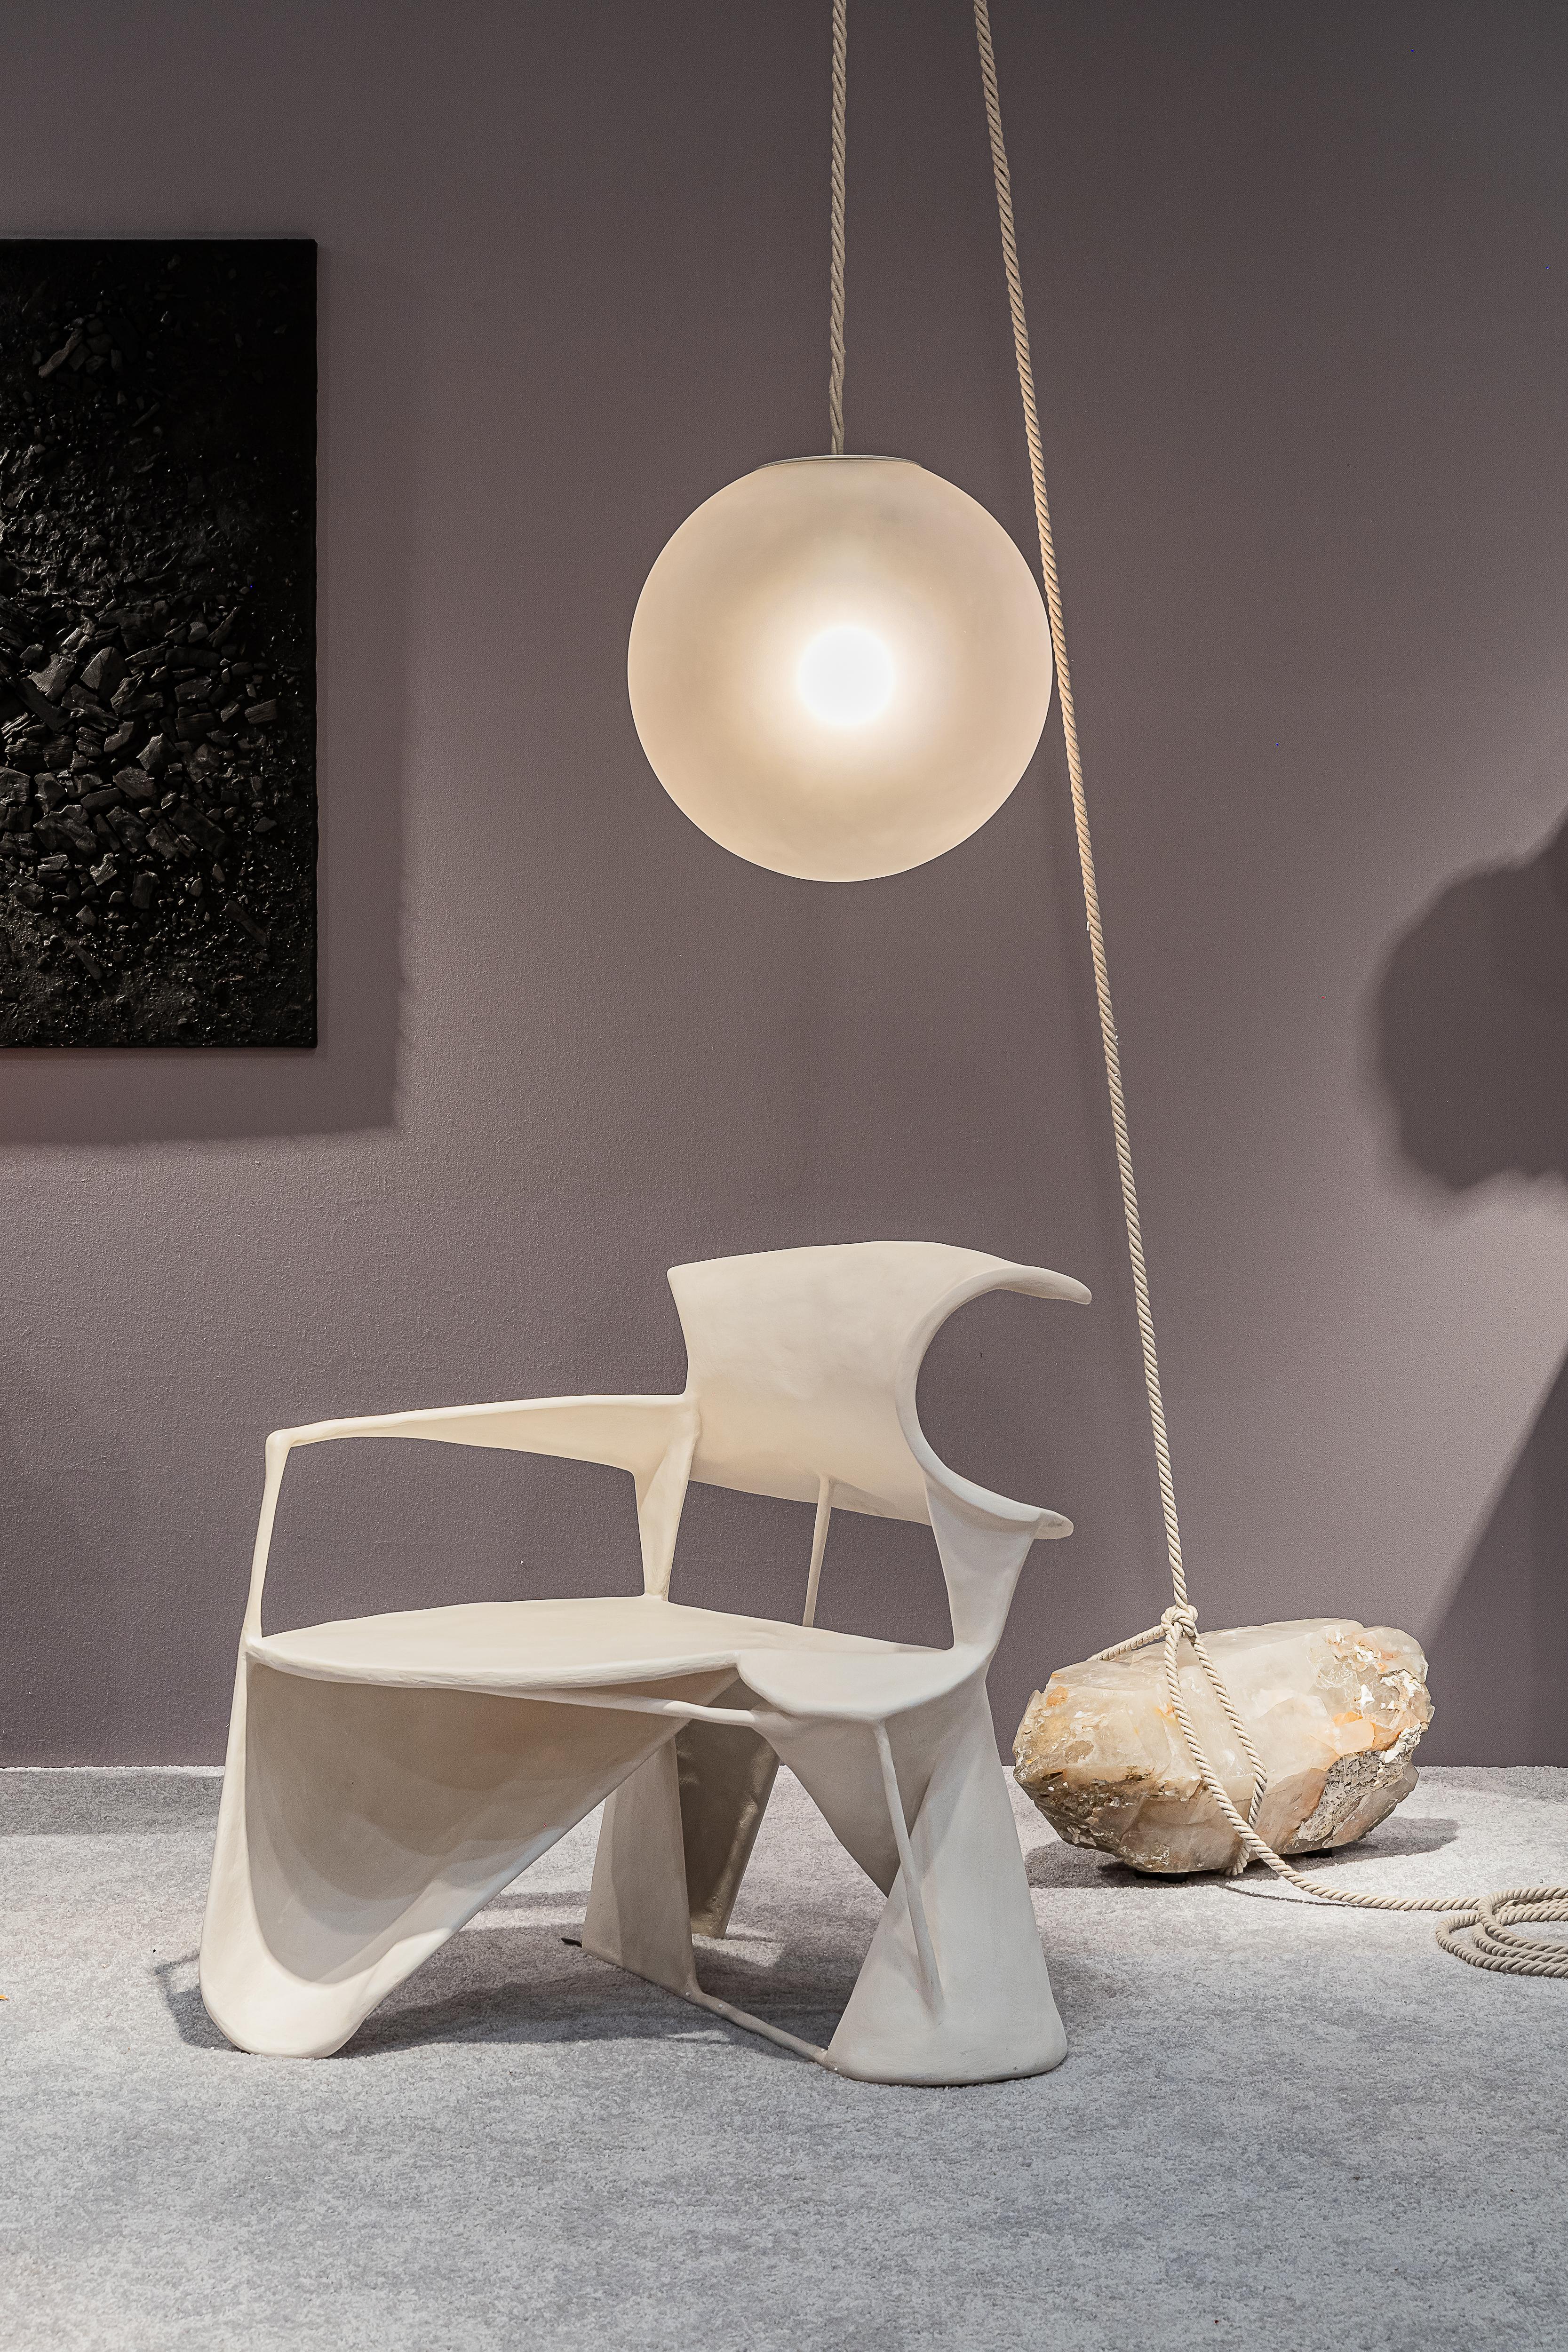 Organic Modern Beacon of Light Unique Madagascar Quartz D50 Glass Sculptural Pendant Floor Lamp For Sale